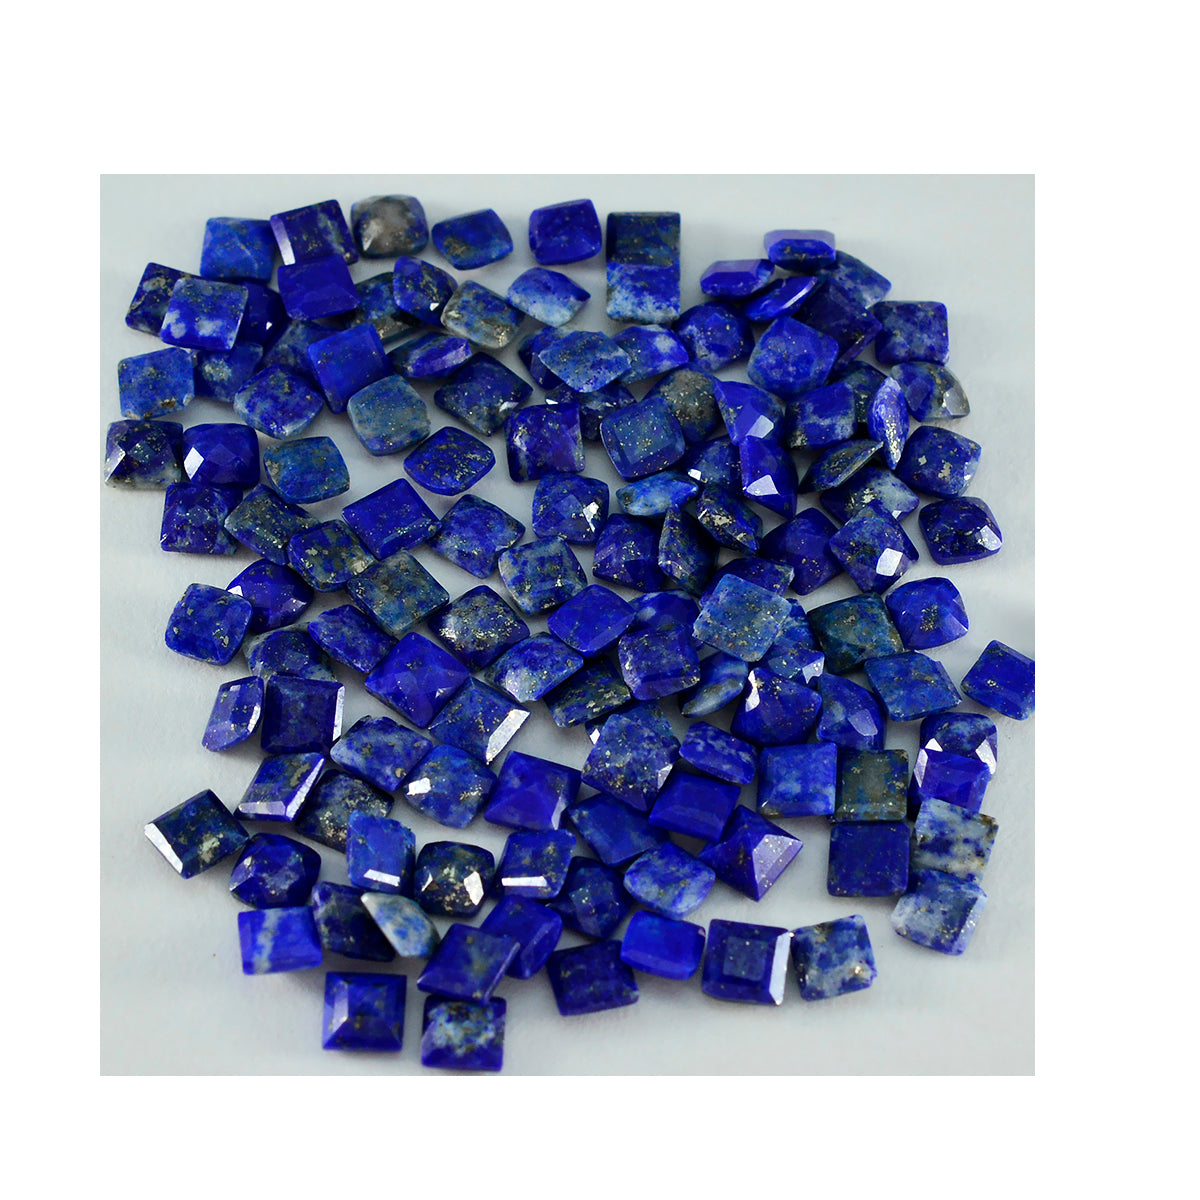 Riyogems 1PC Genuine Blue Lapis Lazuli Faceted 4x4 mm Square Shape handsome Quality Loose Stone